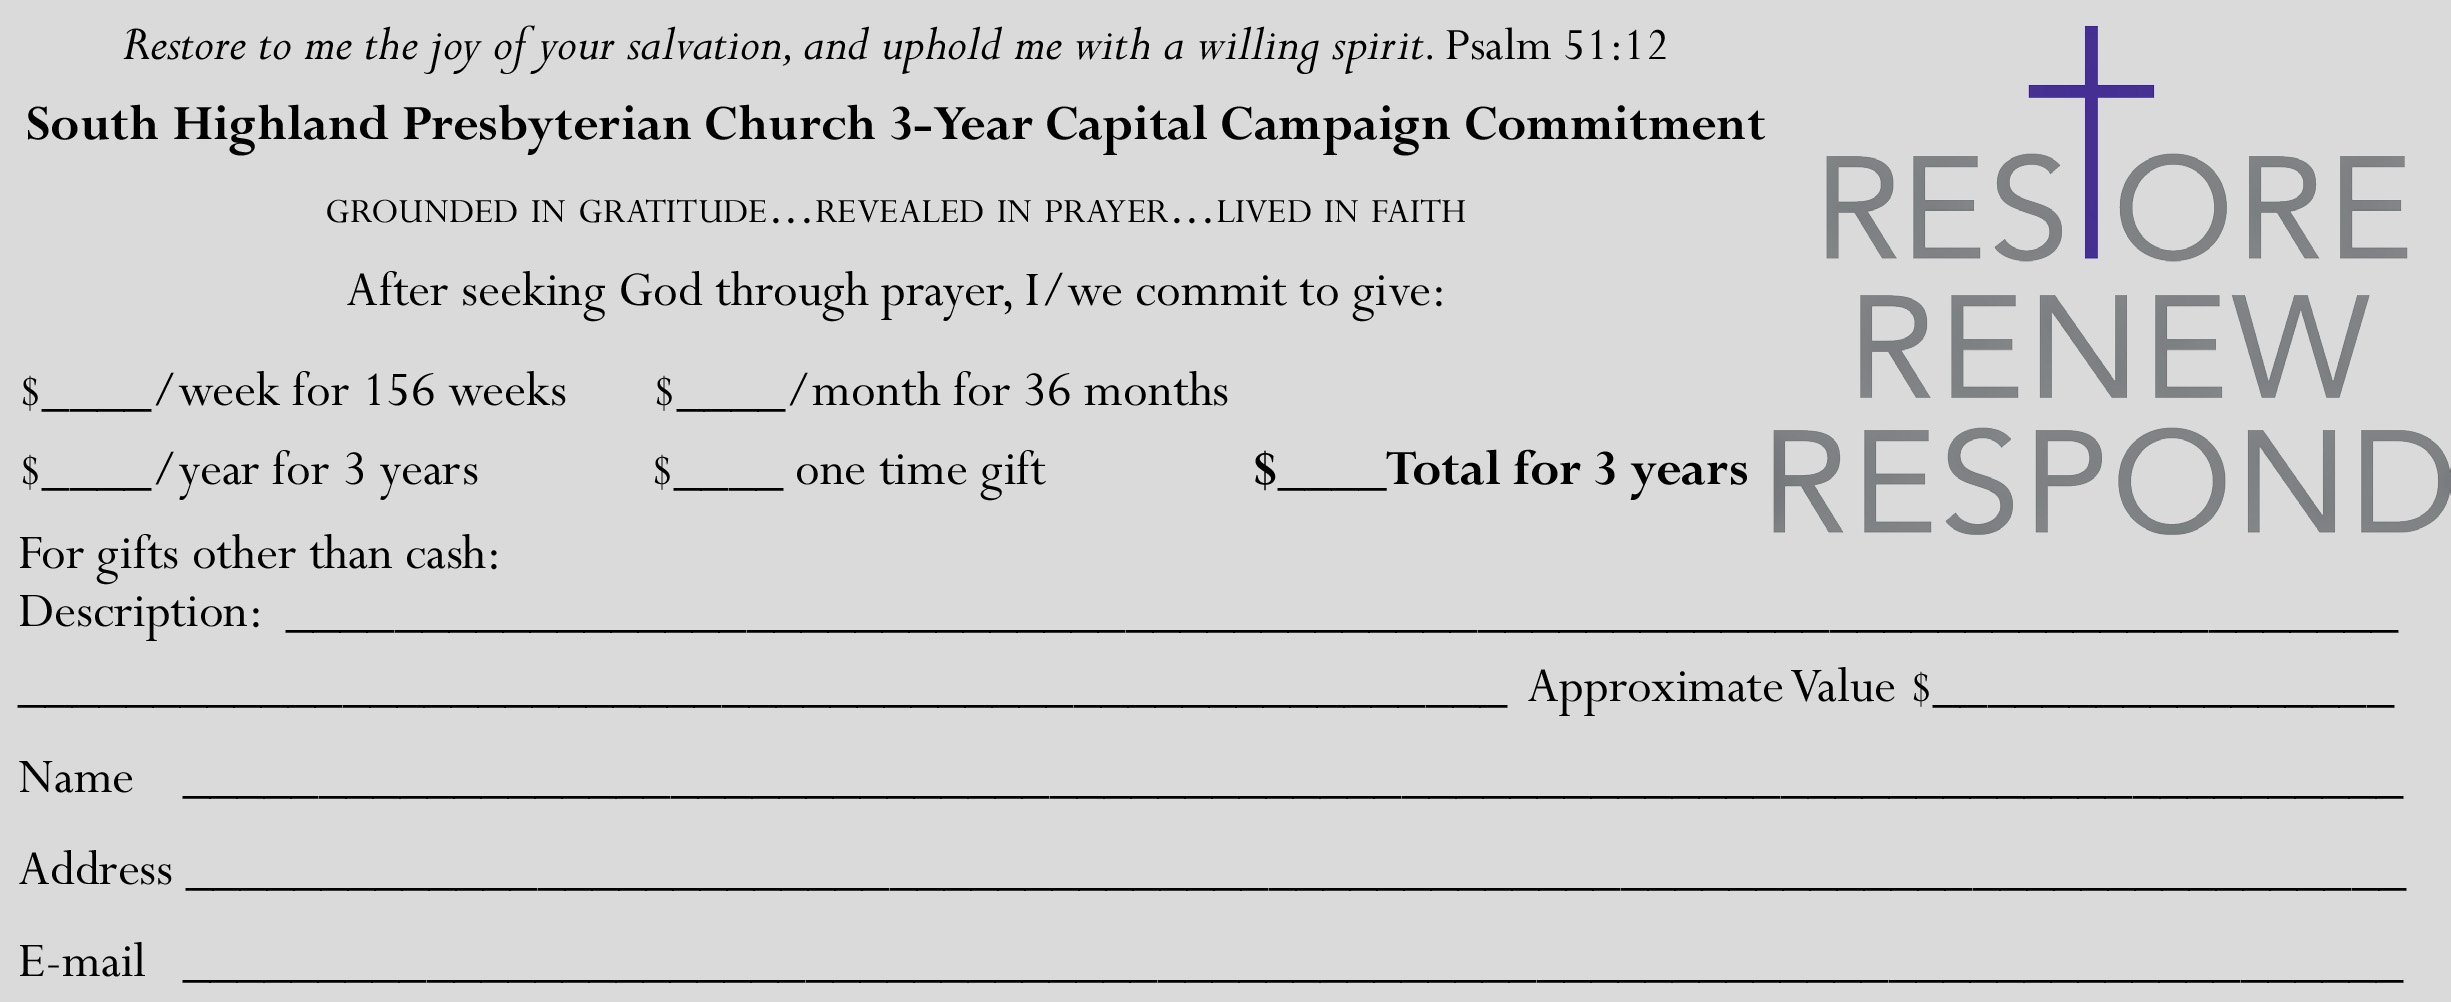 Free Pledge Card Template Awesome south Highland Presbyterian Church Pledge Cards